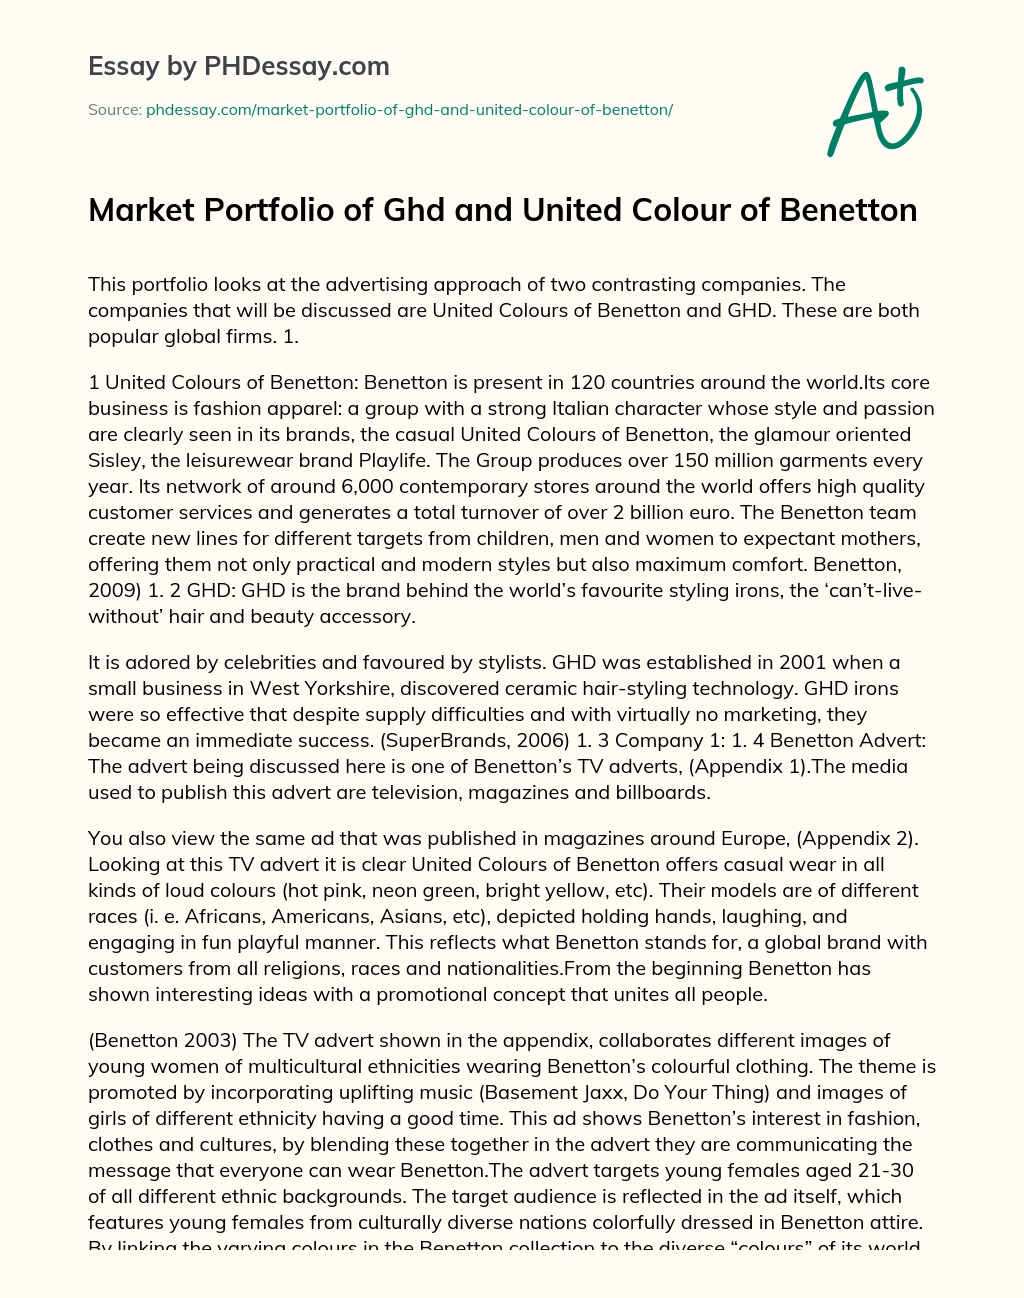 Market Portfolio of Ghd and United Colour of Benetton essay